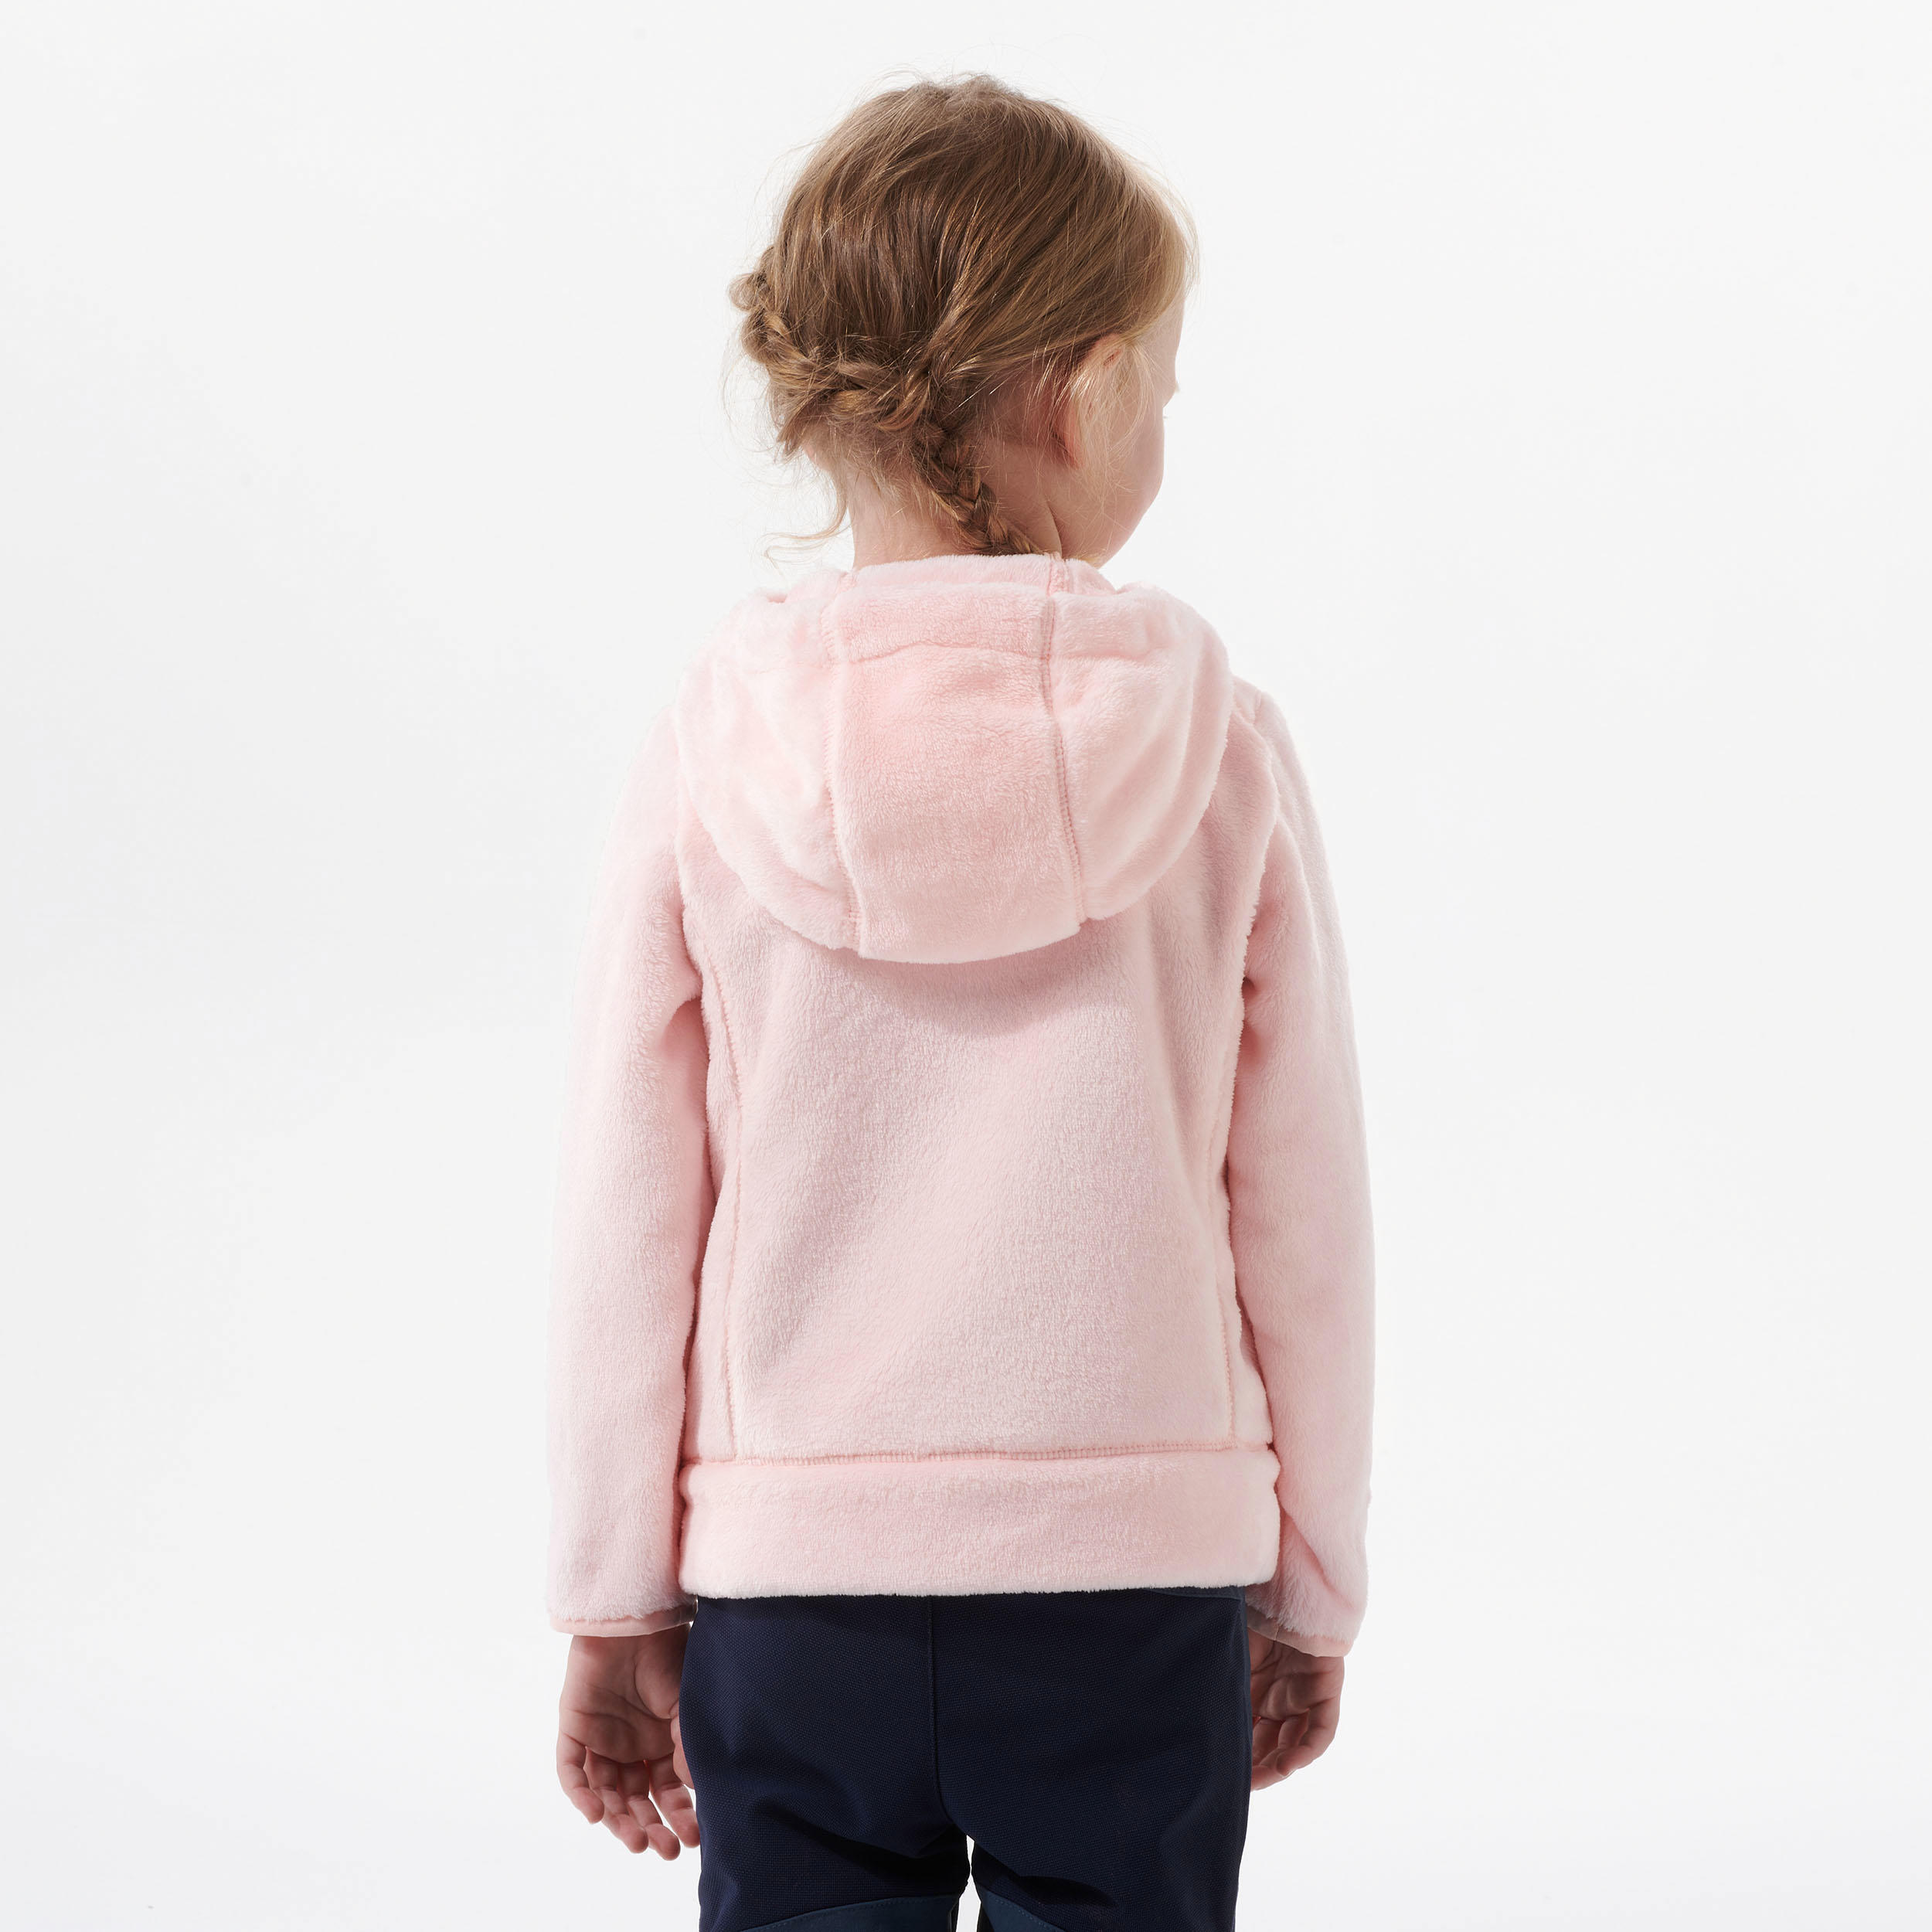 Kids’ Warm Hiking Fleece Jacket - MH500 Aged 2-6 - Pink 4/6